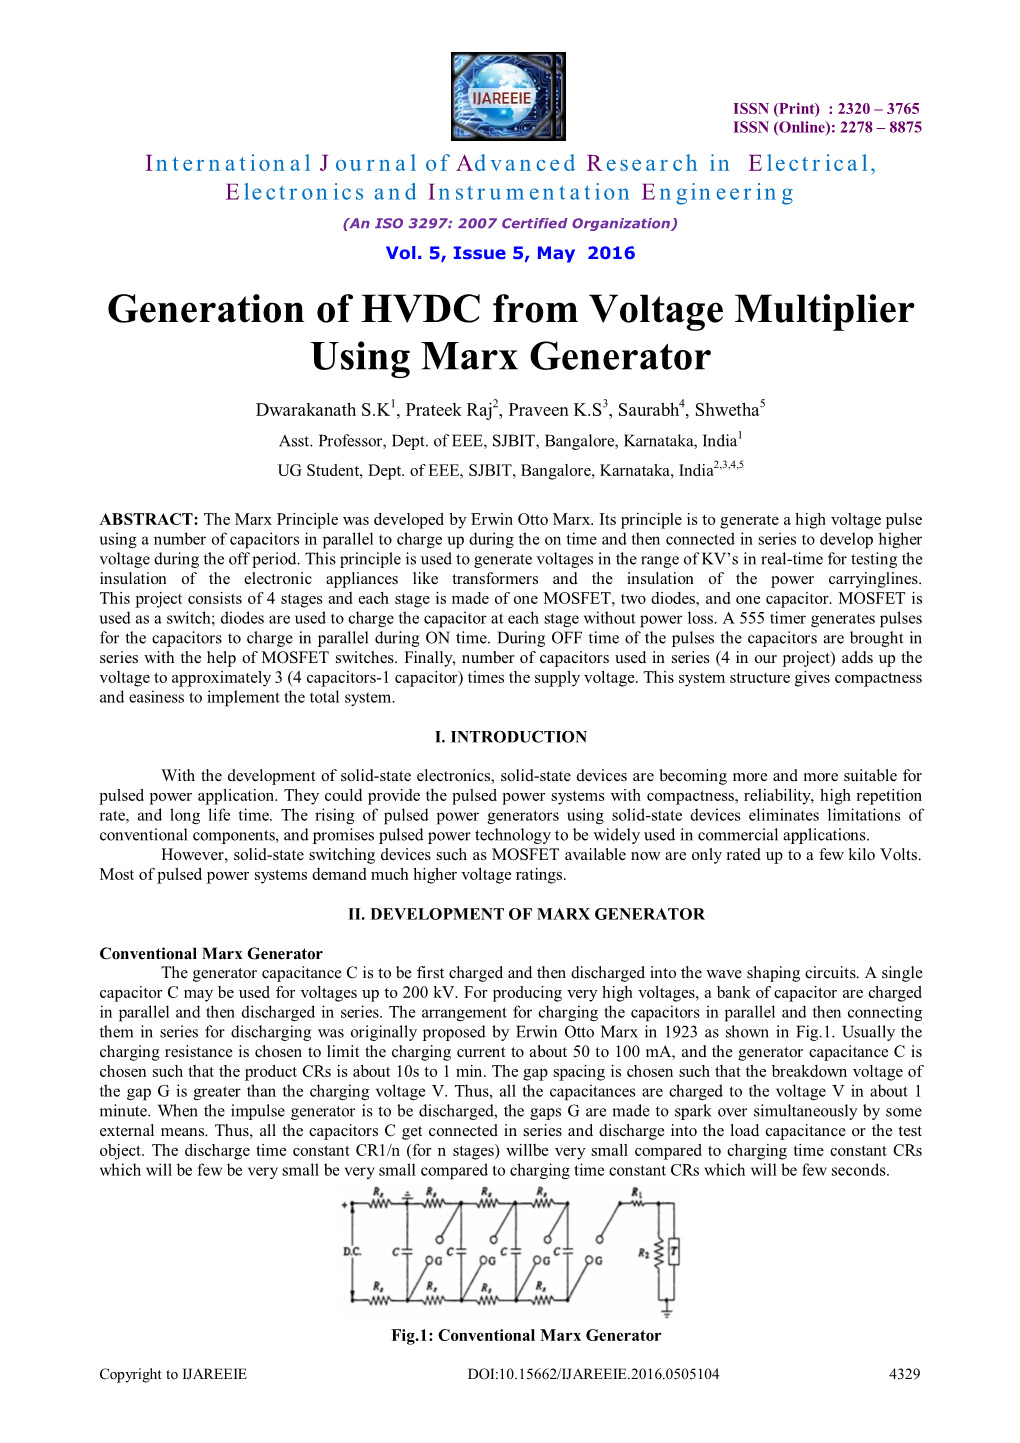 Generation of HVDC from Voltage Multiplier Using Marx Generator